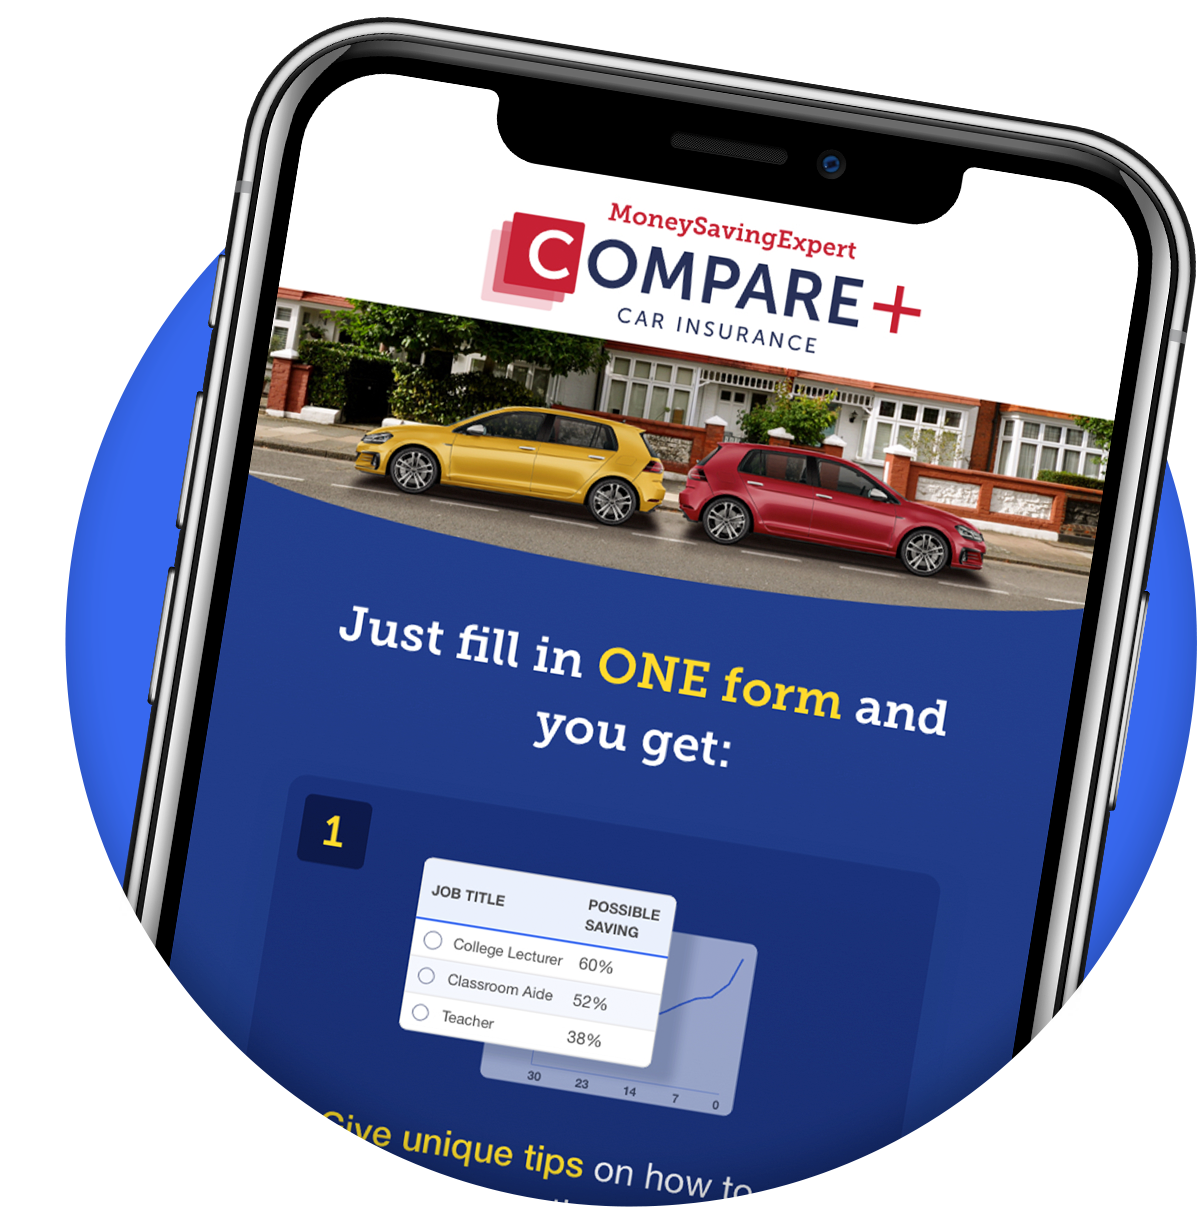 MoneySavingExpert's Car Insurance Compare Plus tool